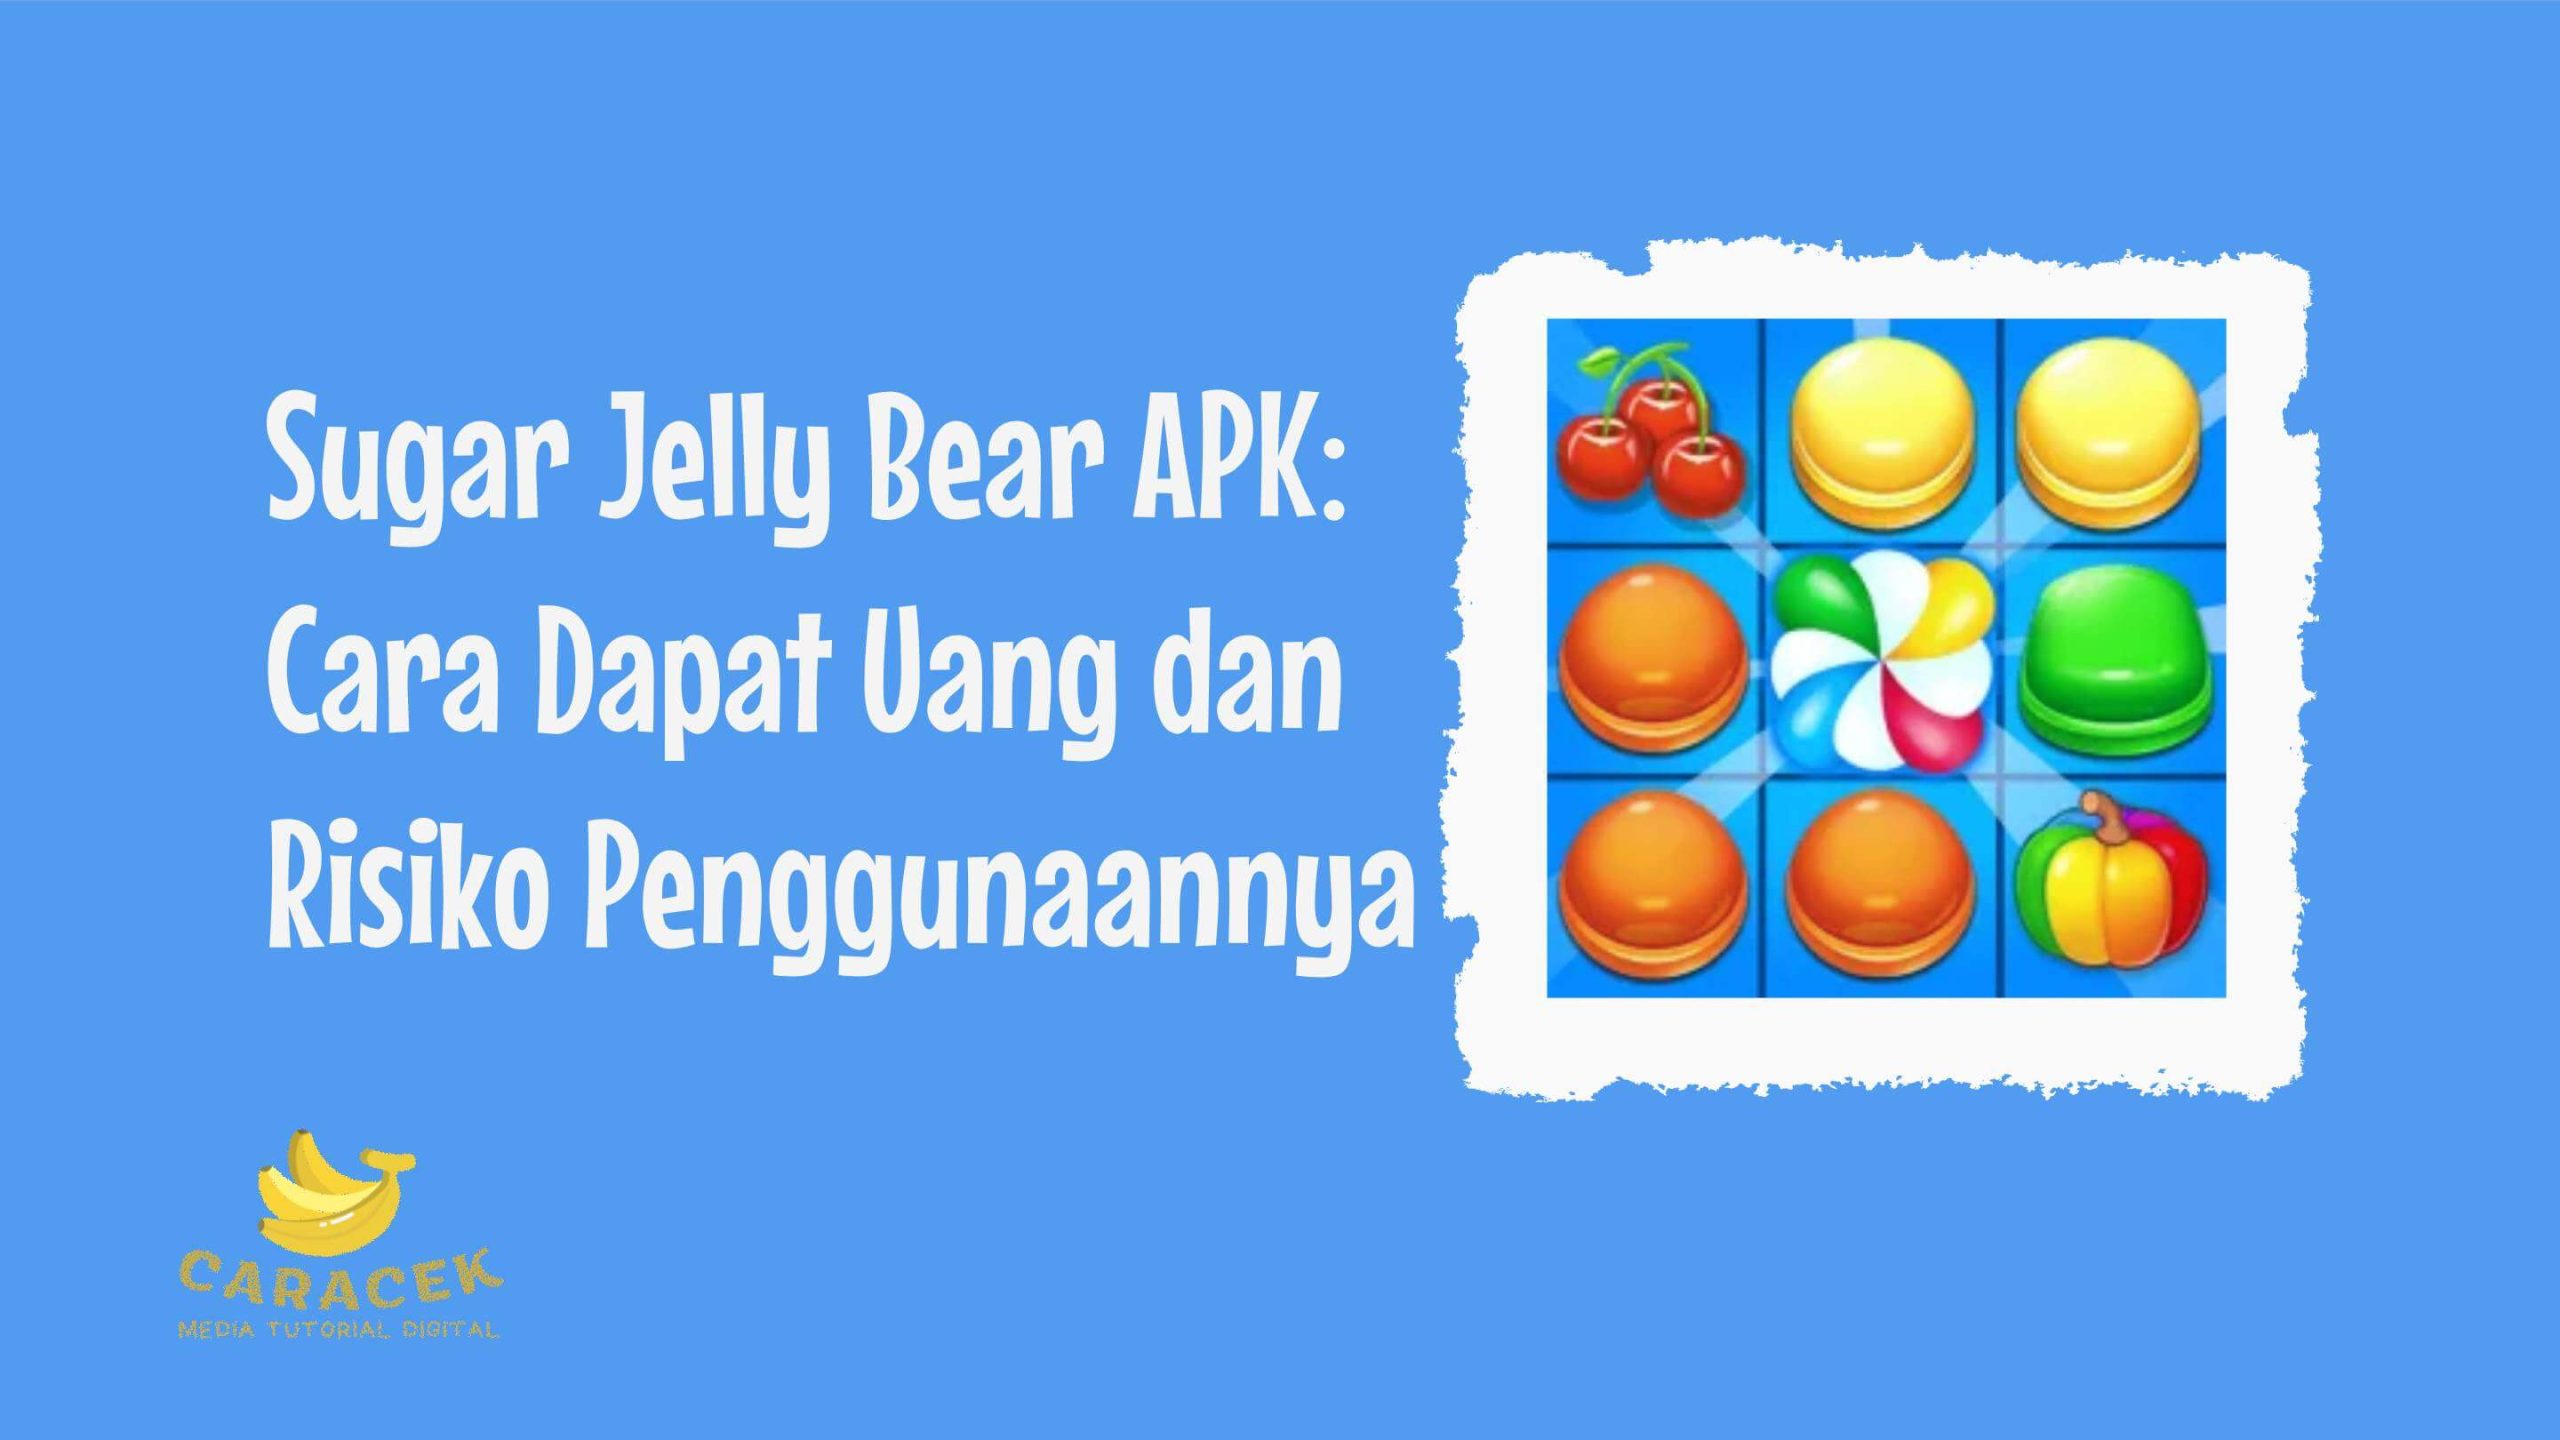 Sugar Jelly Bear APK